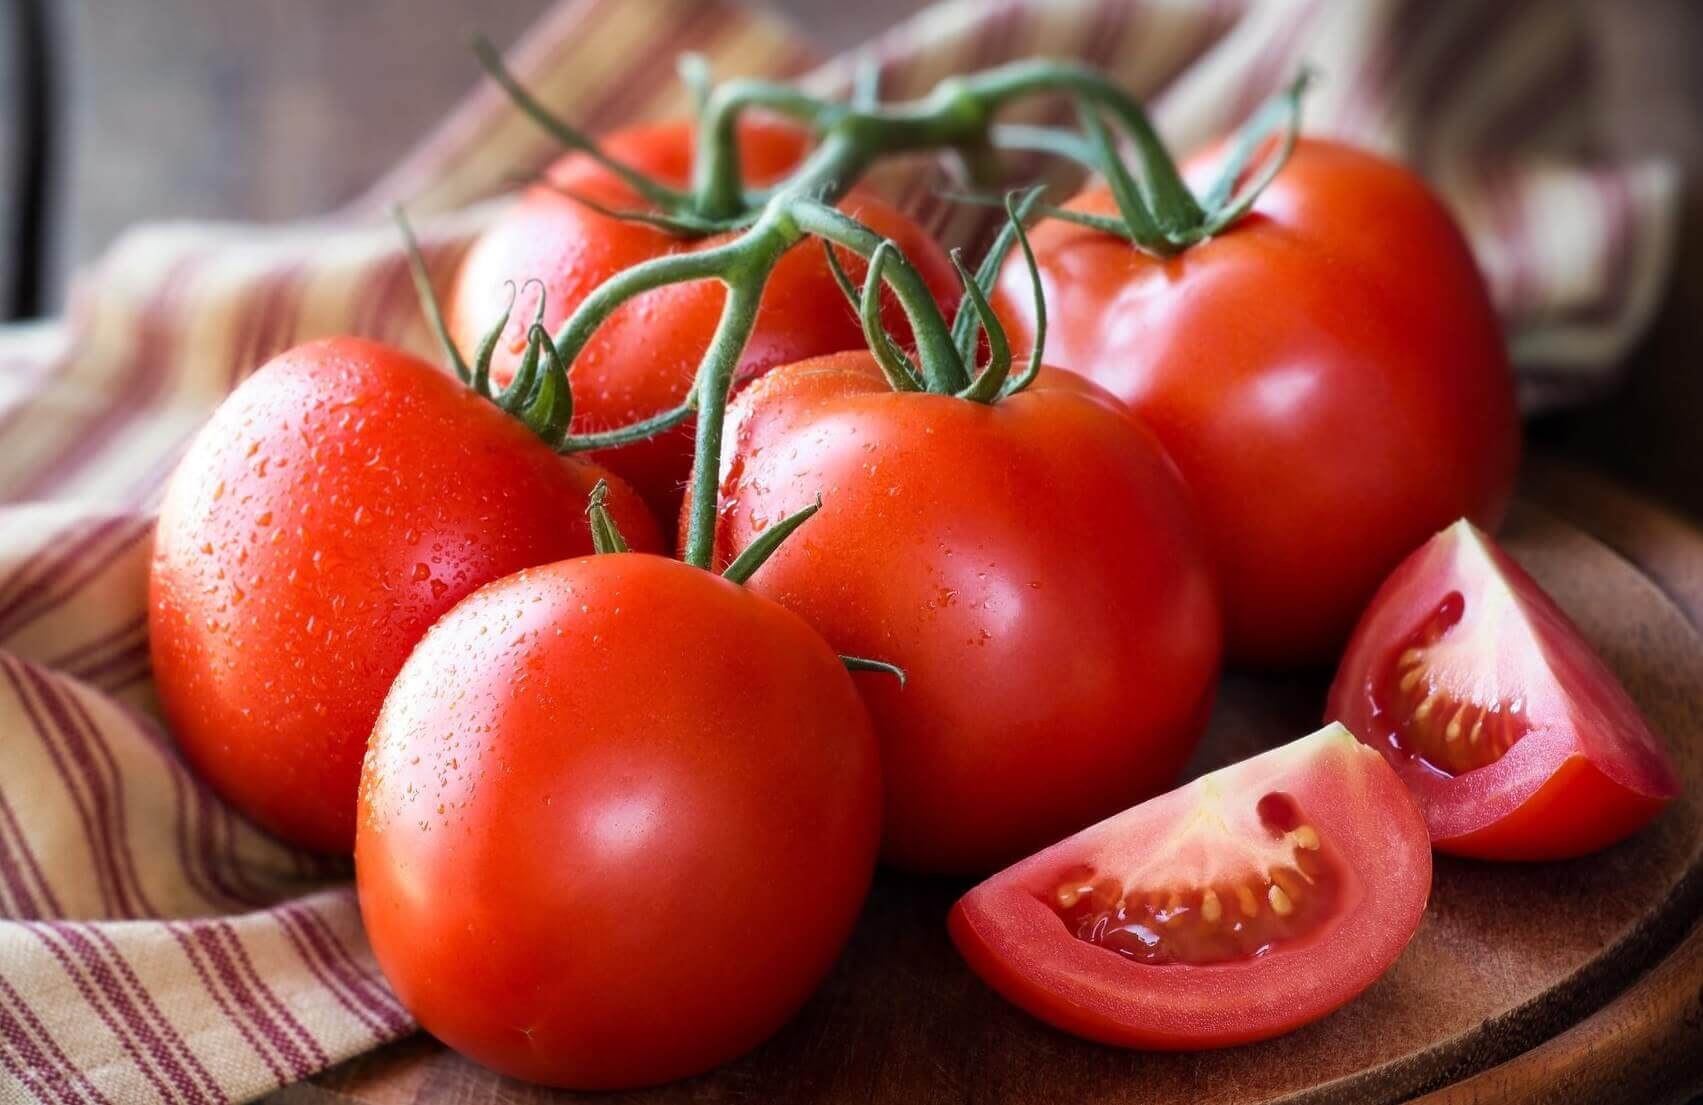 Pronunciation of Tomato